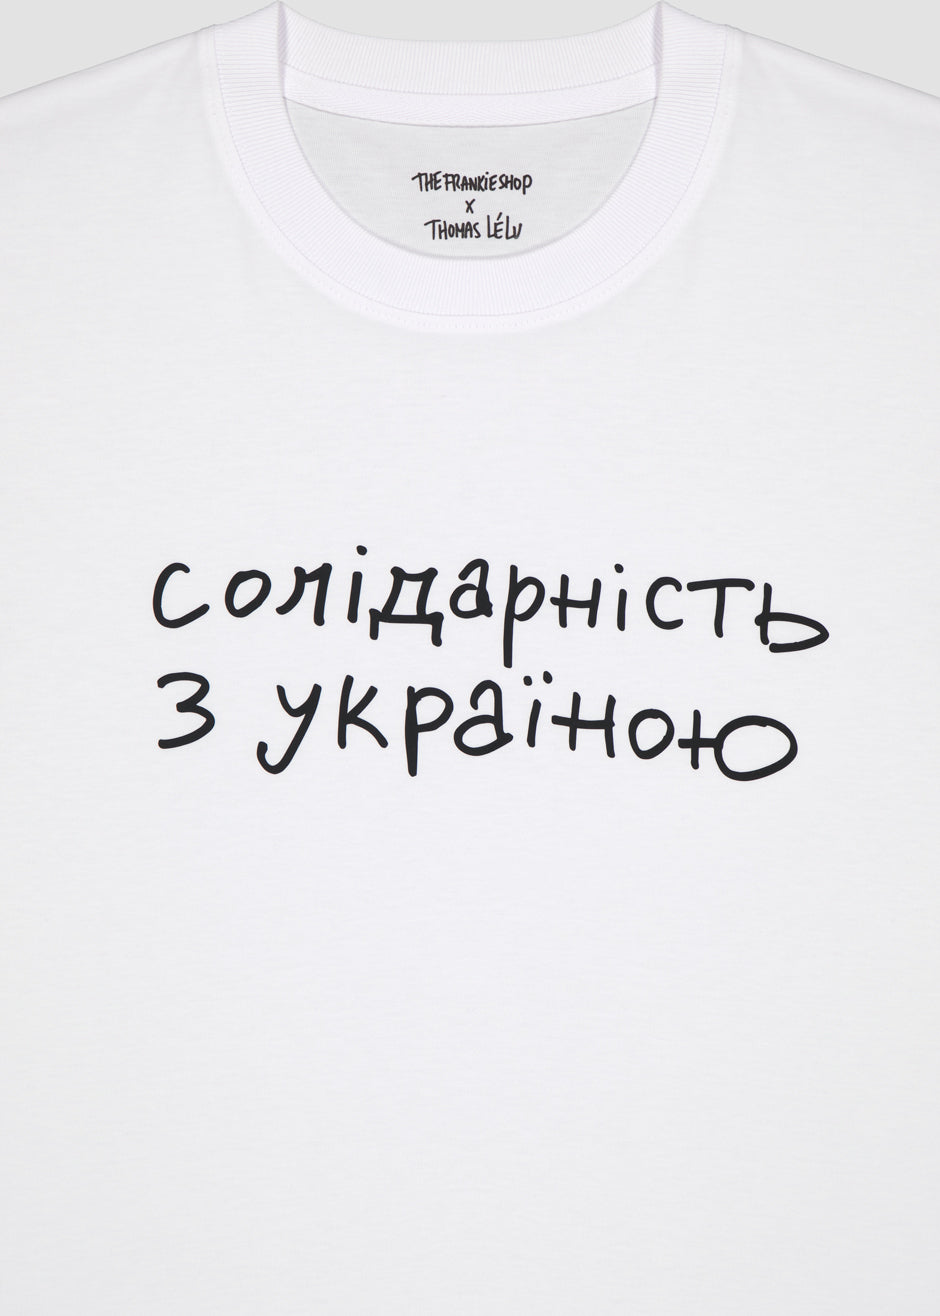 The Frankie Shop x Thomas Lélu Solidarity T-Shirt - White/Black - 16